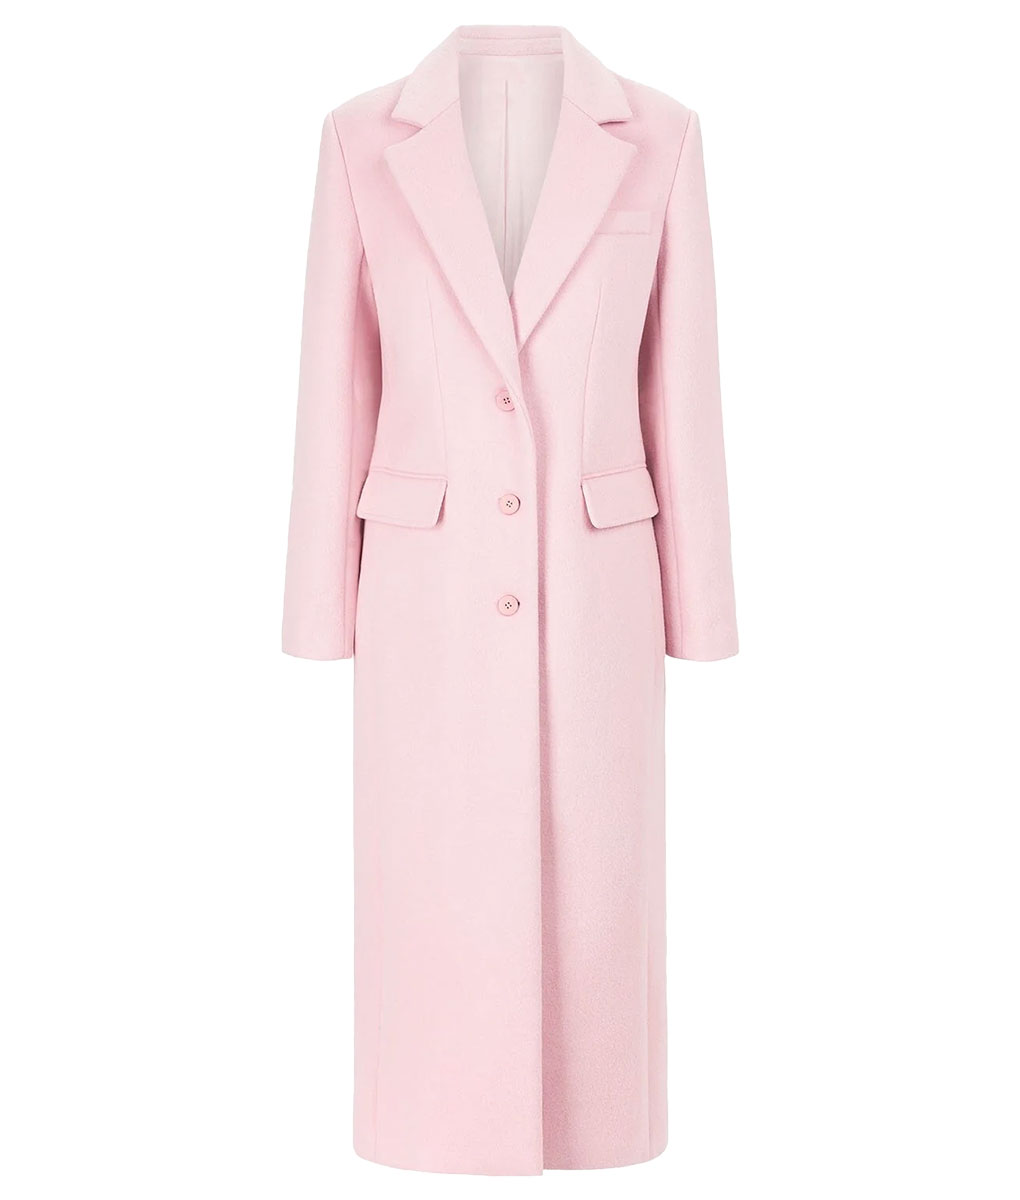 Selena Gomez Rare Beauty Pink Coat (3)